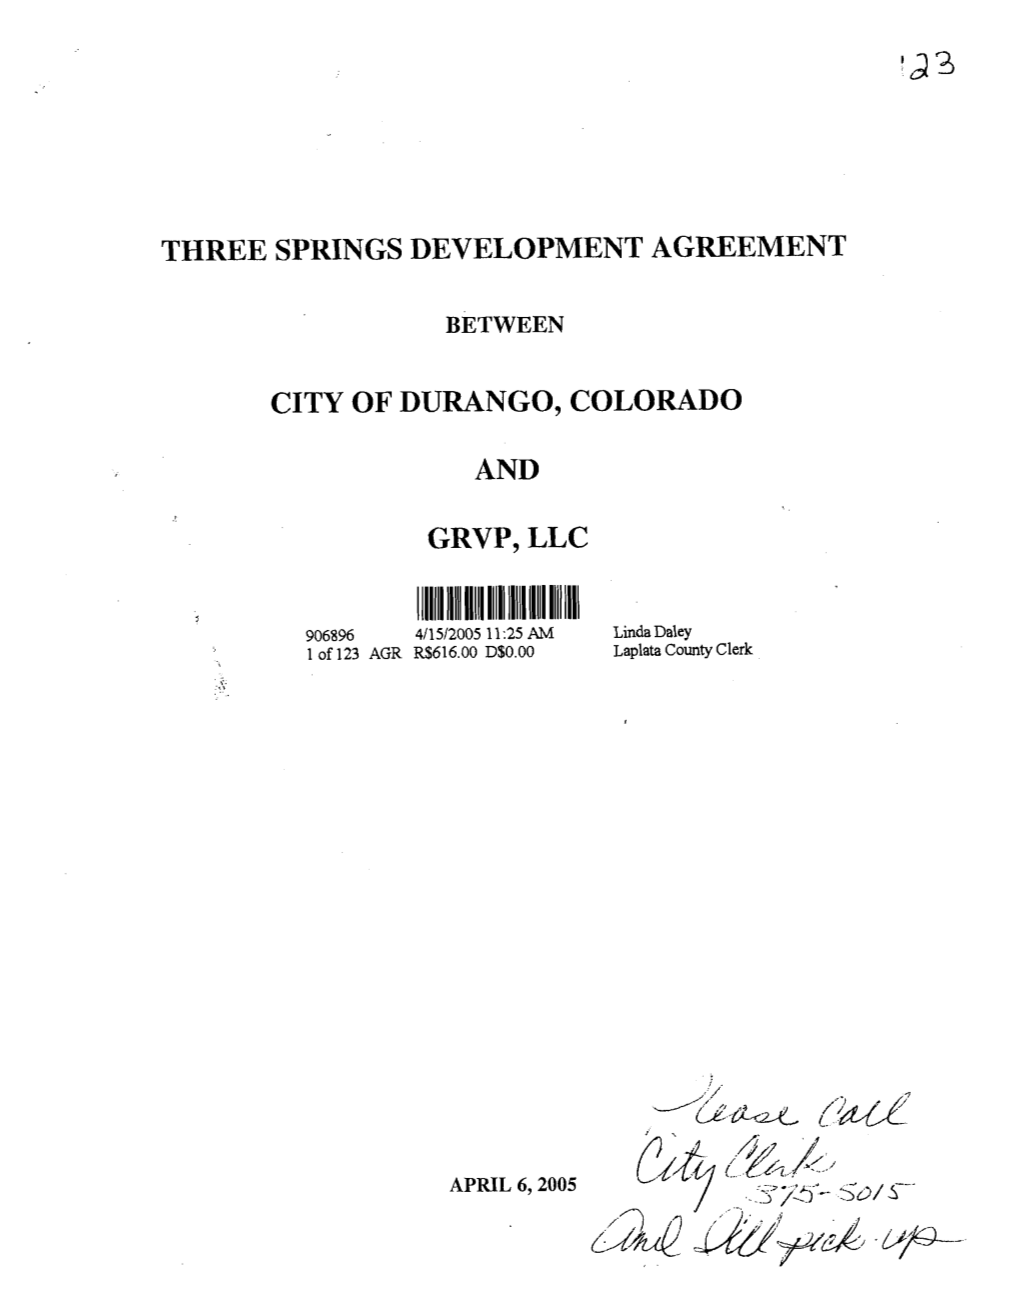 Three Springs Development Agreement